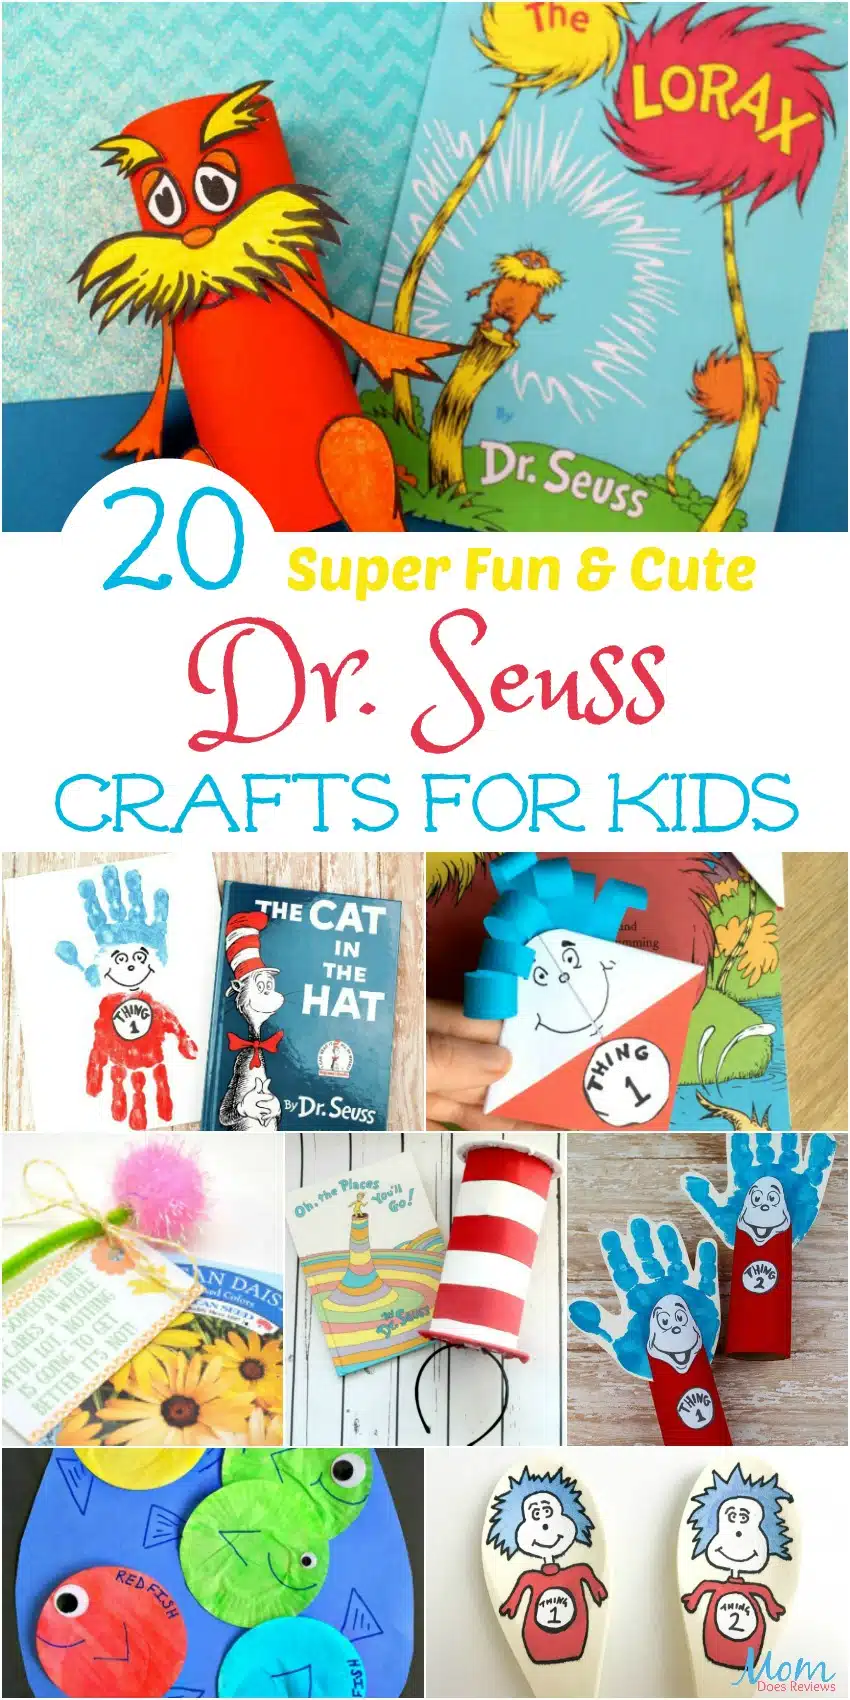 20 Super Fun & Cute Dr. Seuss Crafts for Kids  #crafts #funstuff #drseuss #fun #momapproved 